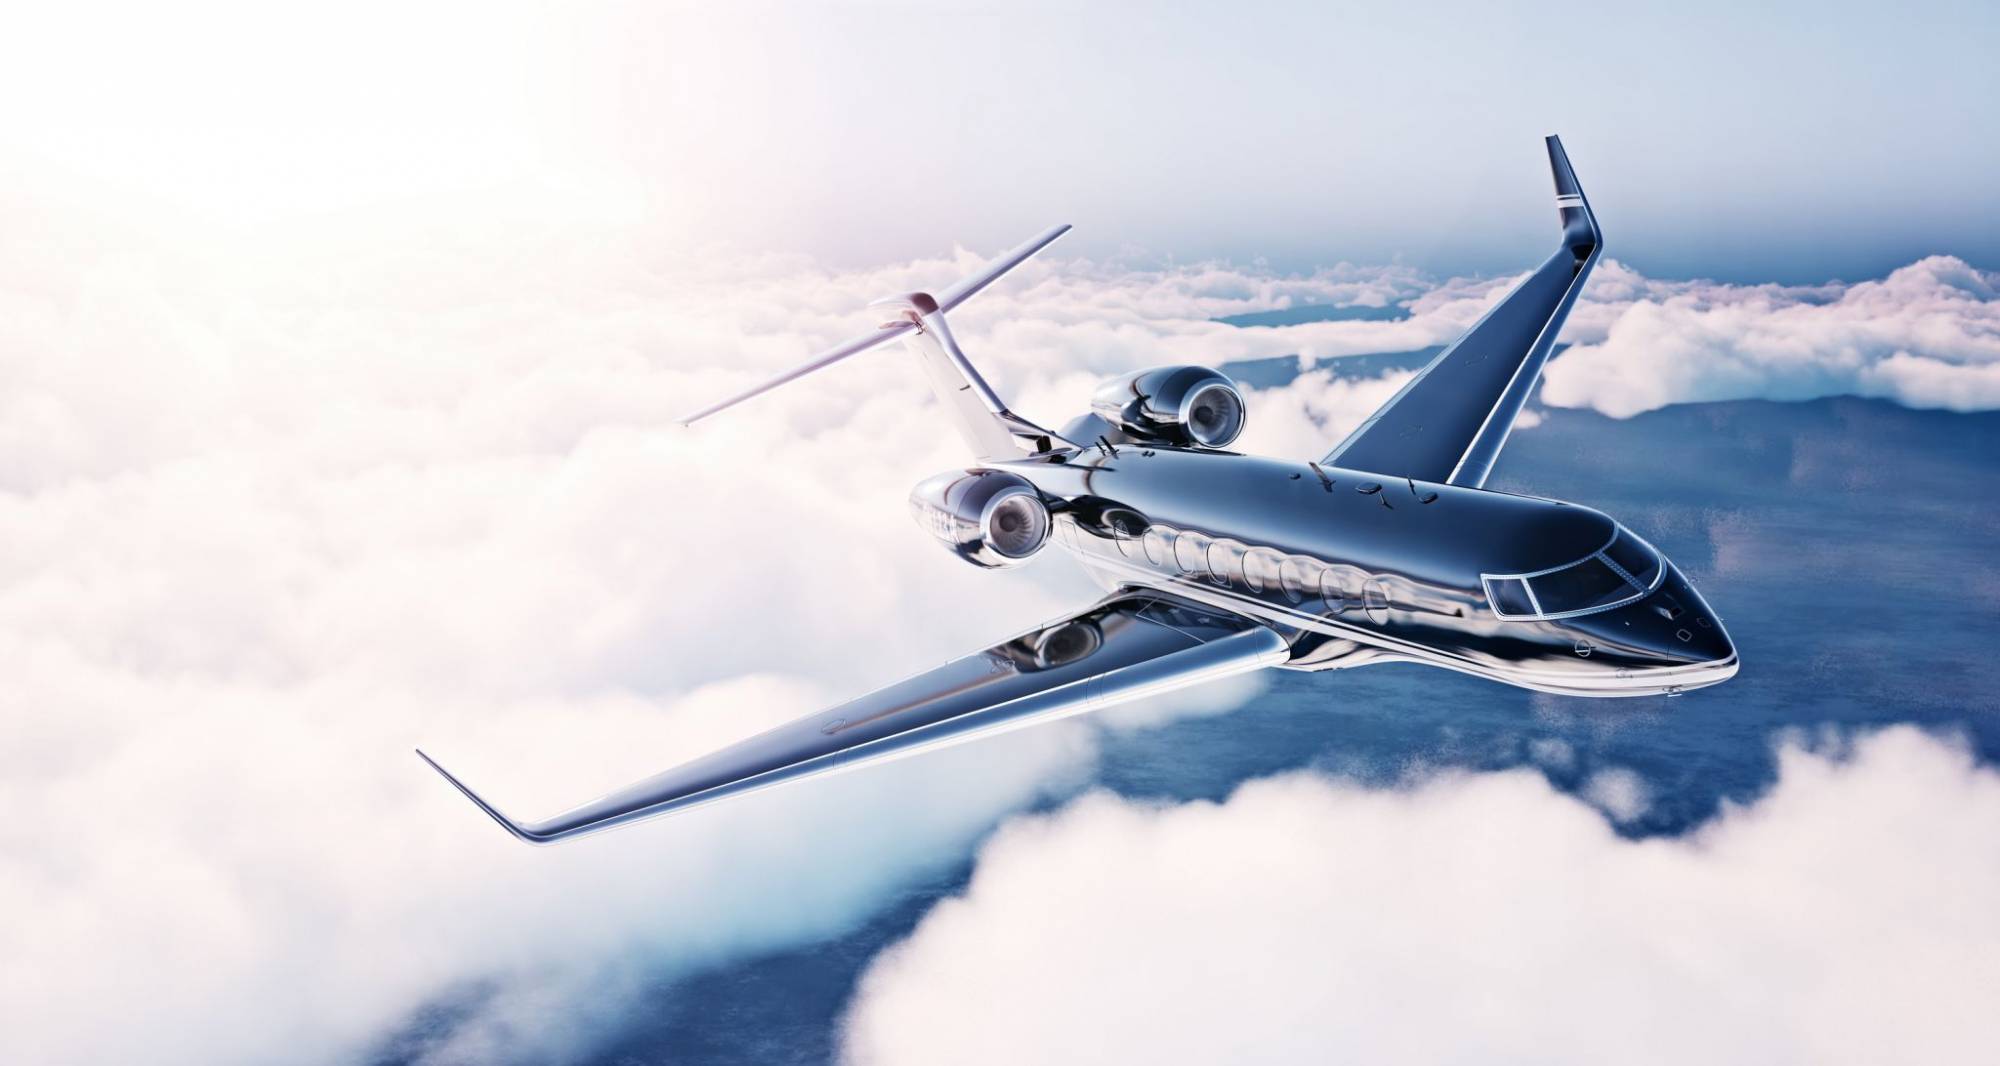 LuxeGetaways - Luxury Travel - Luxury Travel Magazine - Luxe Getaways - Luxury Lifestyle - Private Jetcard Comparison - Private Jets